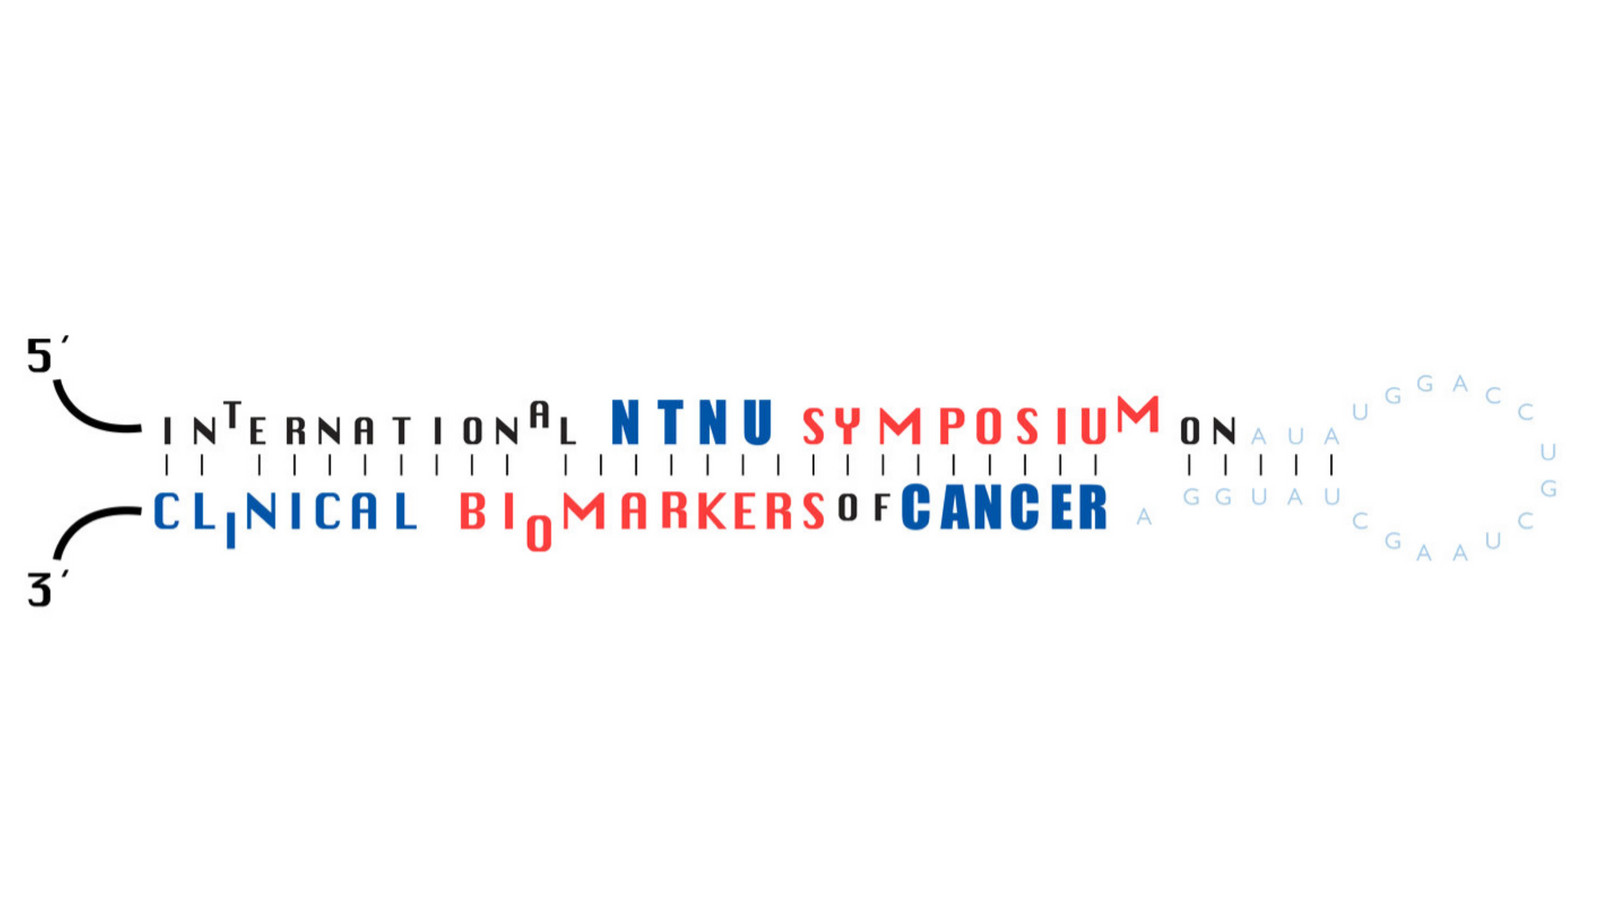 International_NTNU_Symposium_on_Clinical_Biomarkers_of_Cancer_JADBio_Ioannis_Tsamardinos